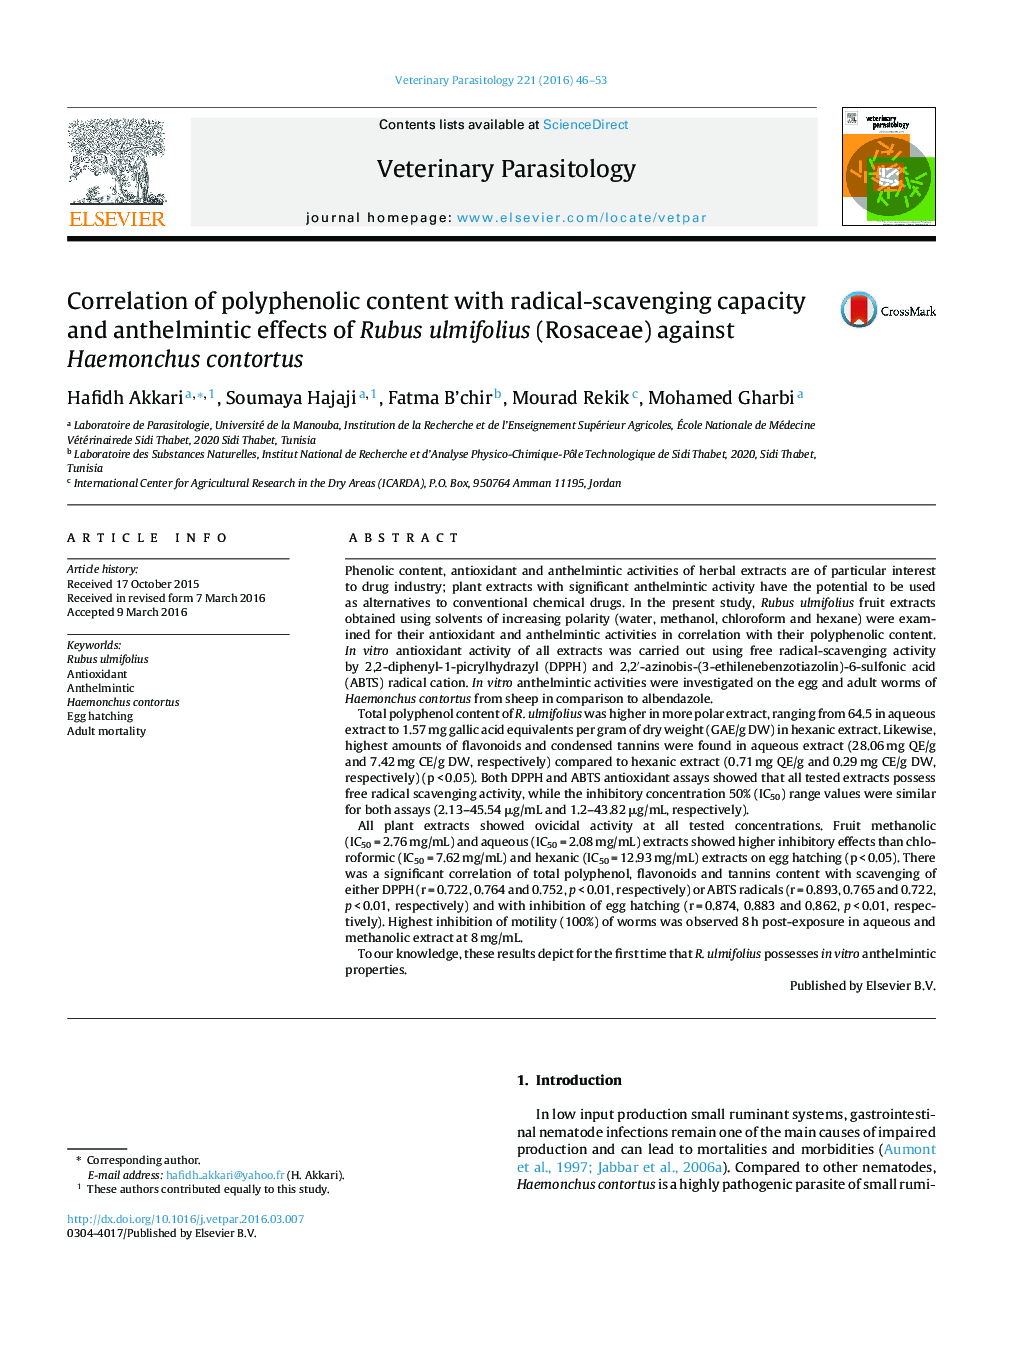 Correlation of polyphenolic content with radical-scavenging capacity and anthelmintic effects of Rubus ulmifolius (Rosaceae) against Haemonchus contortus